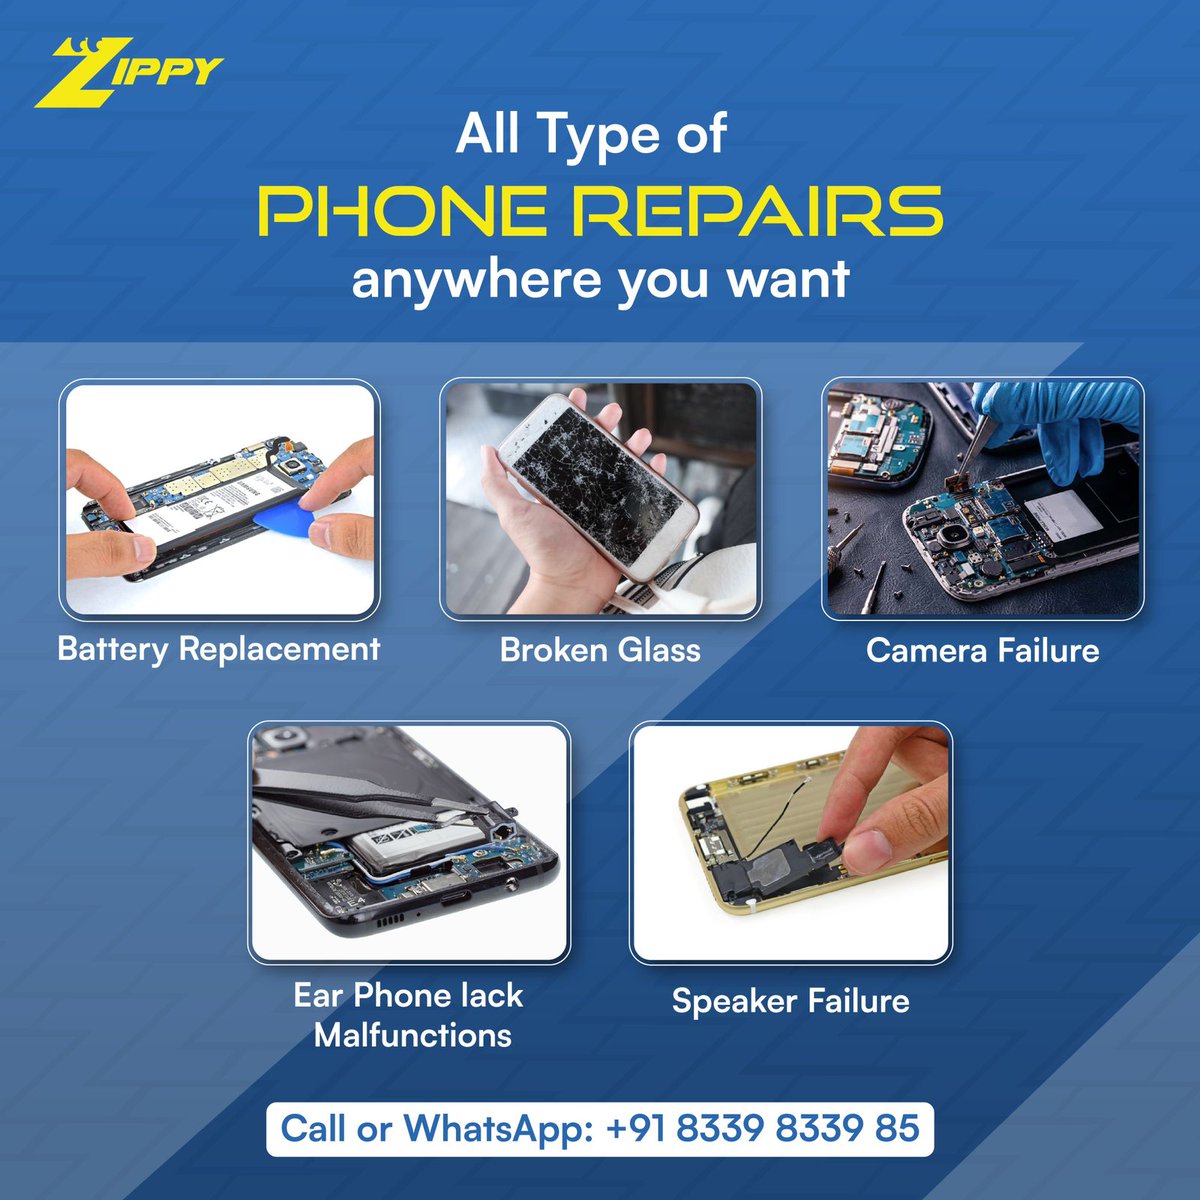 Zippy Repair is Your All-Inclusive Phone Repair Destination! 🔧

#Zippy #ZipZapZip #GadgetRepair #MobileRepair #SmartphoneRepair #LaptopRepair #iOS #Android #TechExpert #Insurance #MobileProtection #OnTheGo #OneStopSolution #TrendingReels #Zippie #TechGuru #ZippyShield